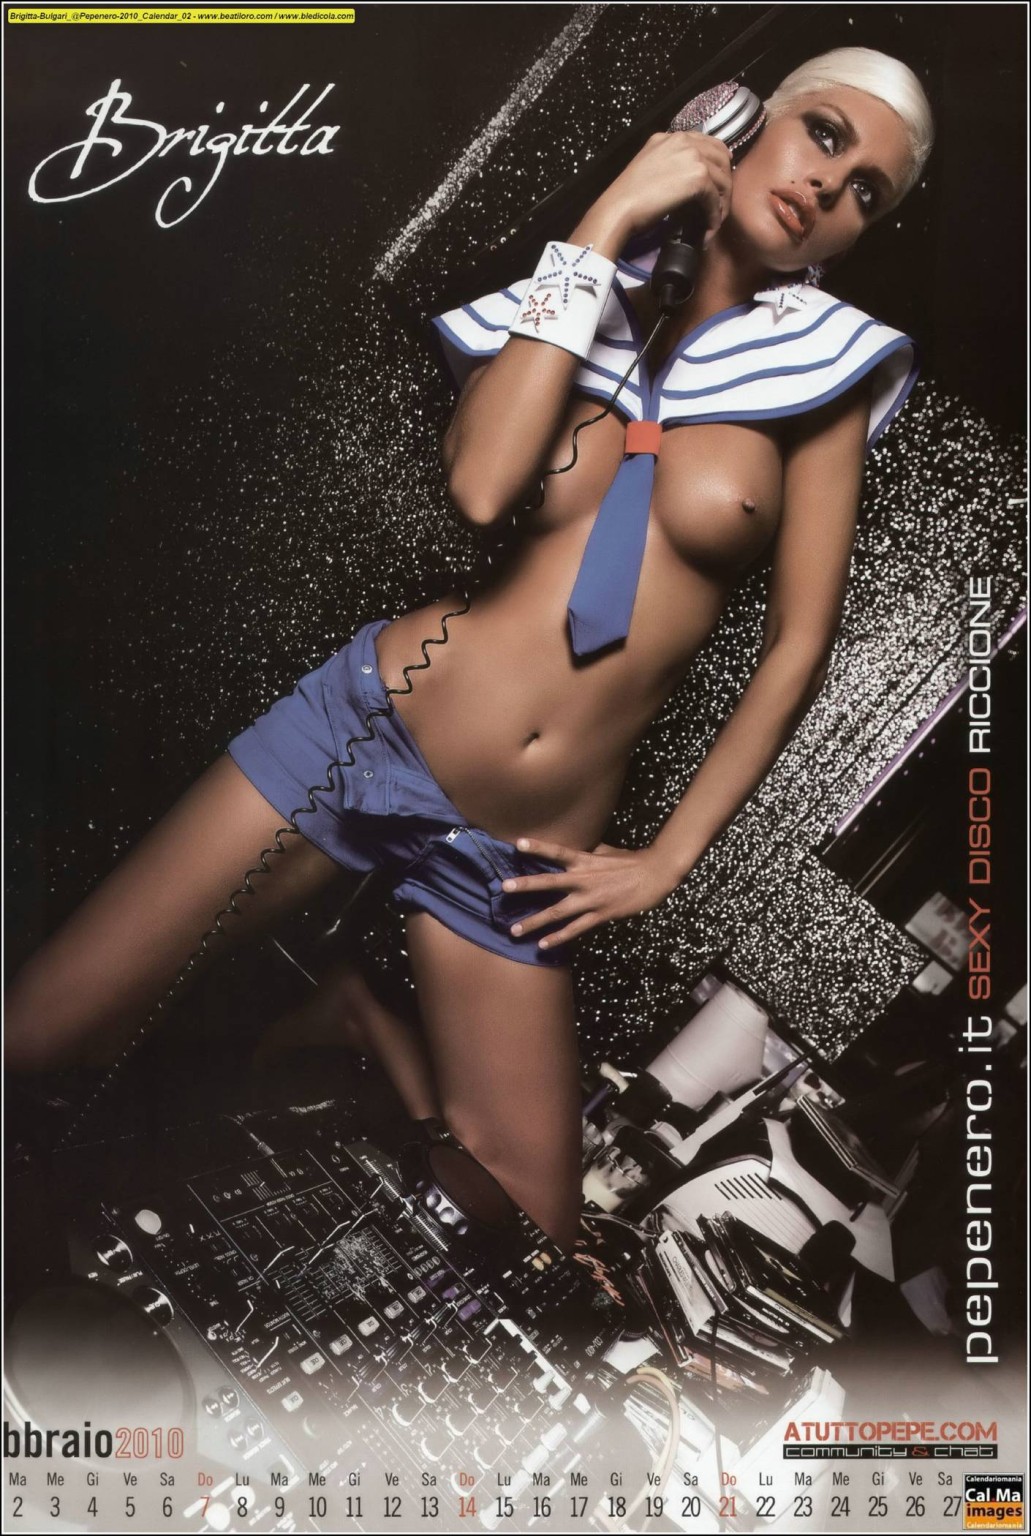 Brigitta Bulgari fully nude killer body in her official 2010 calendar #75345258